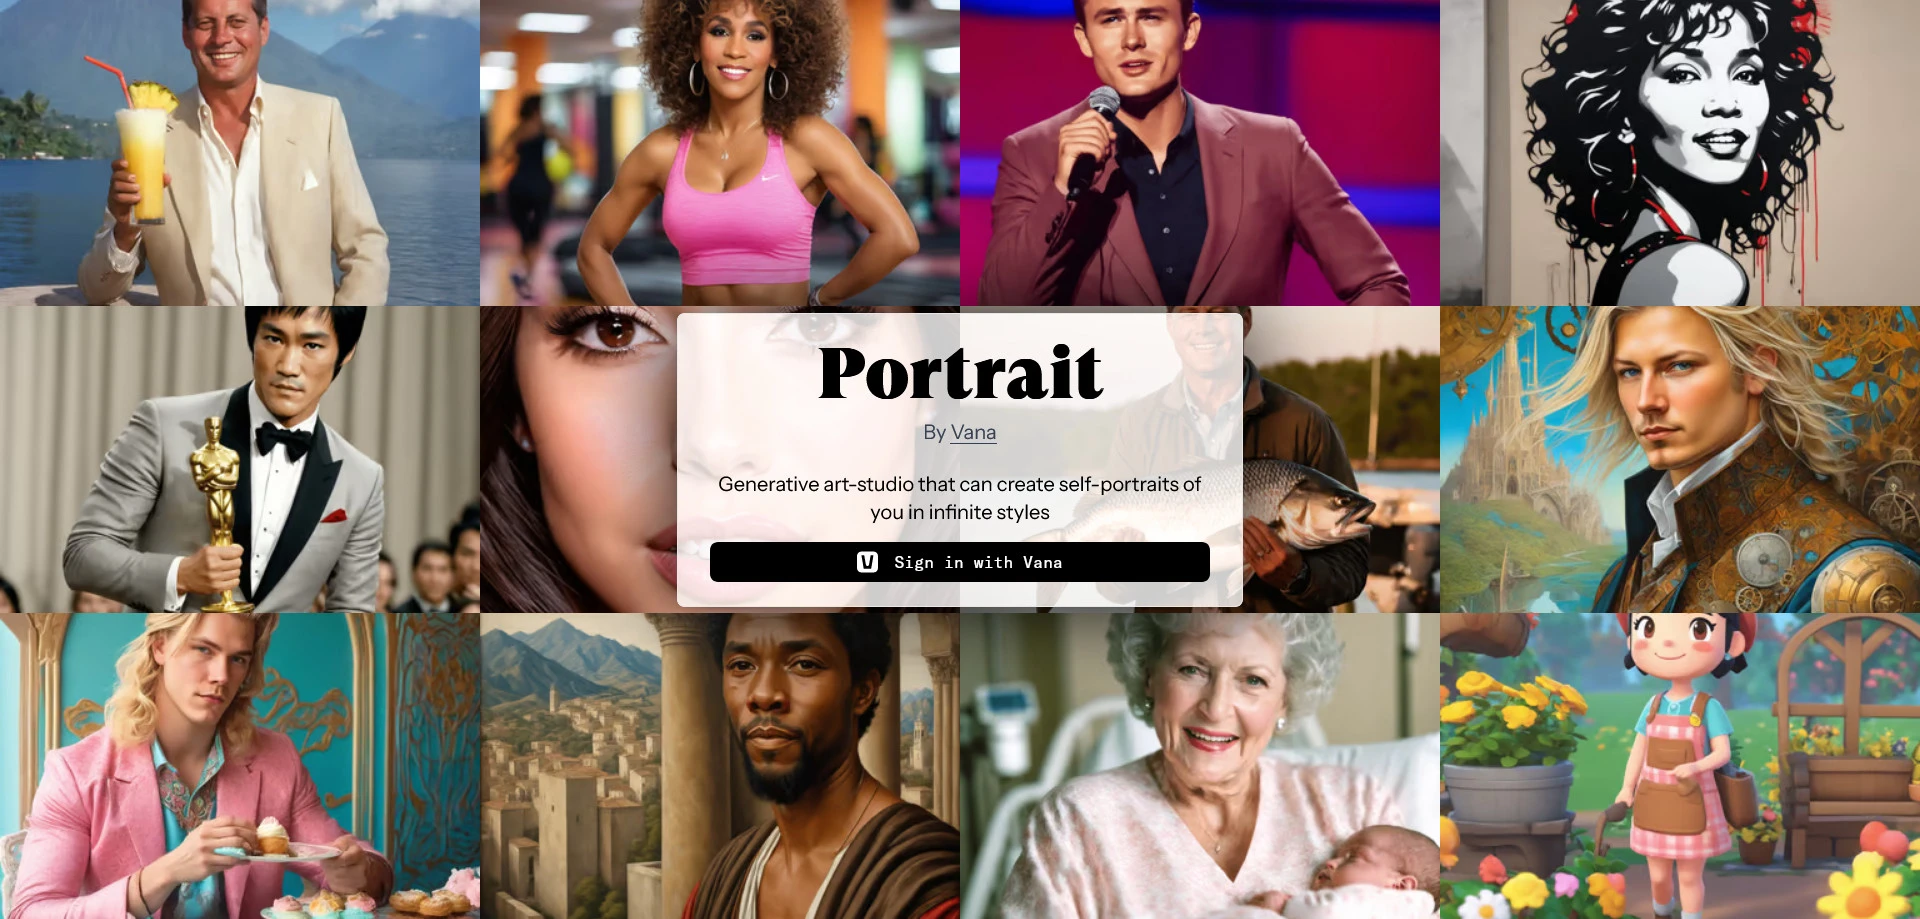 AI工具与服务推荐 - Vana Portrait - AI自画像生成工具 - 特色图片